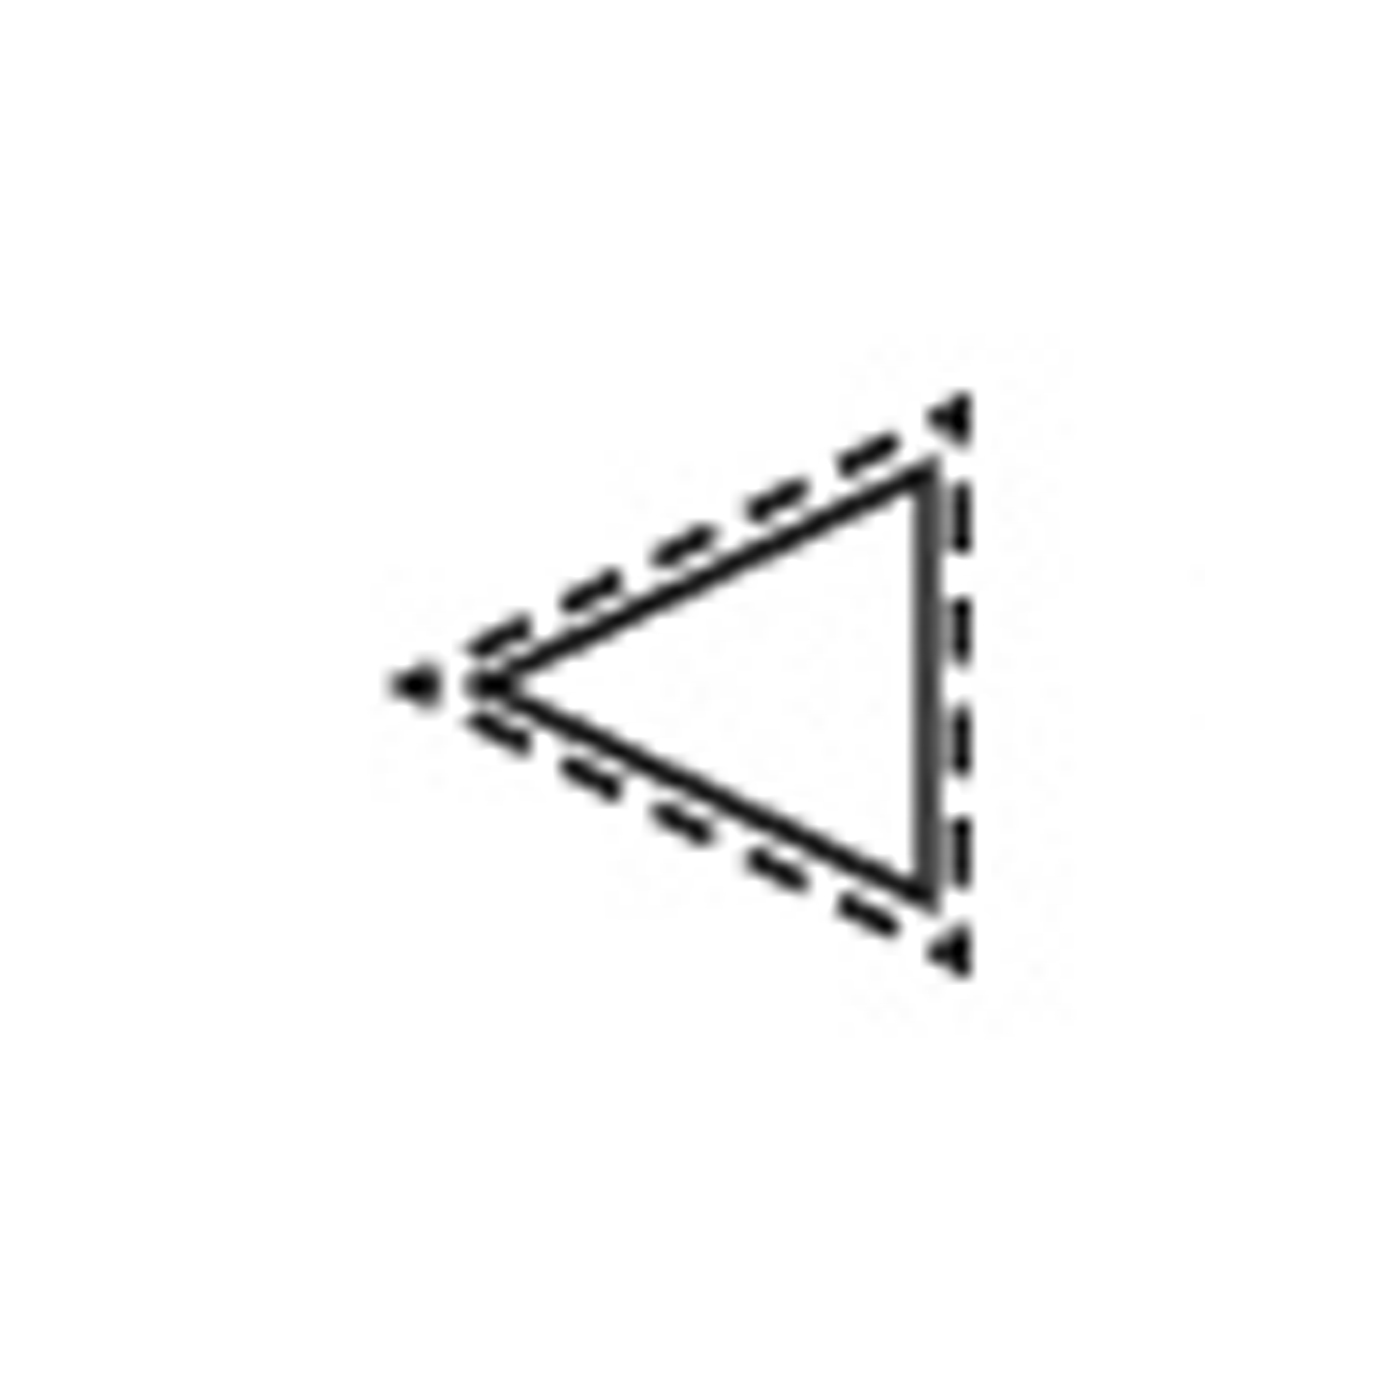 Friedr. Dick Diamant-Nadelfeile, dreikant, mittlere Körnung, 140 mm - 1 Stück